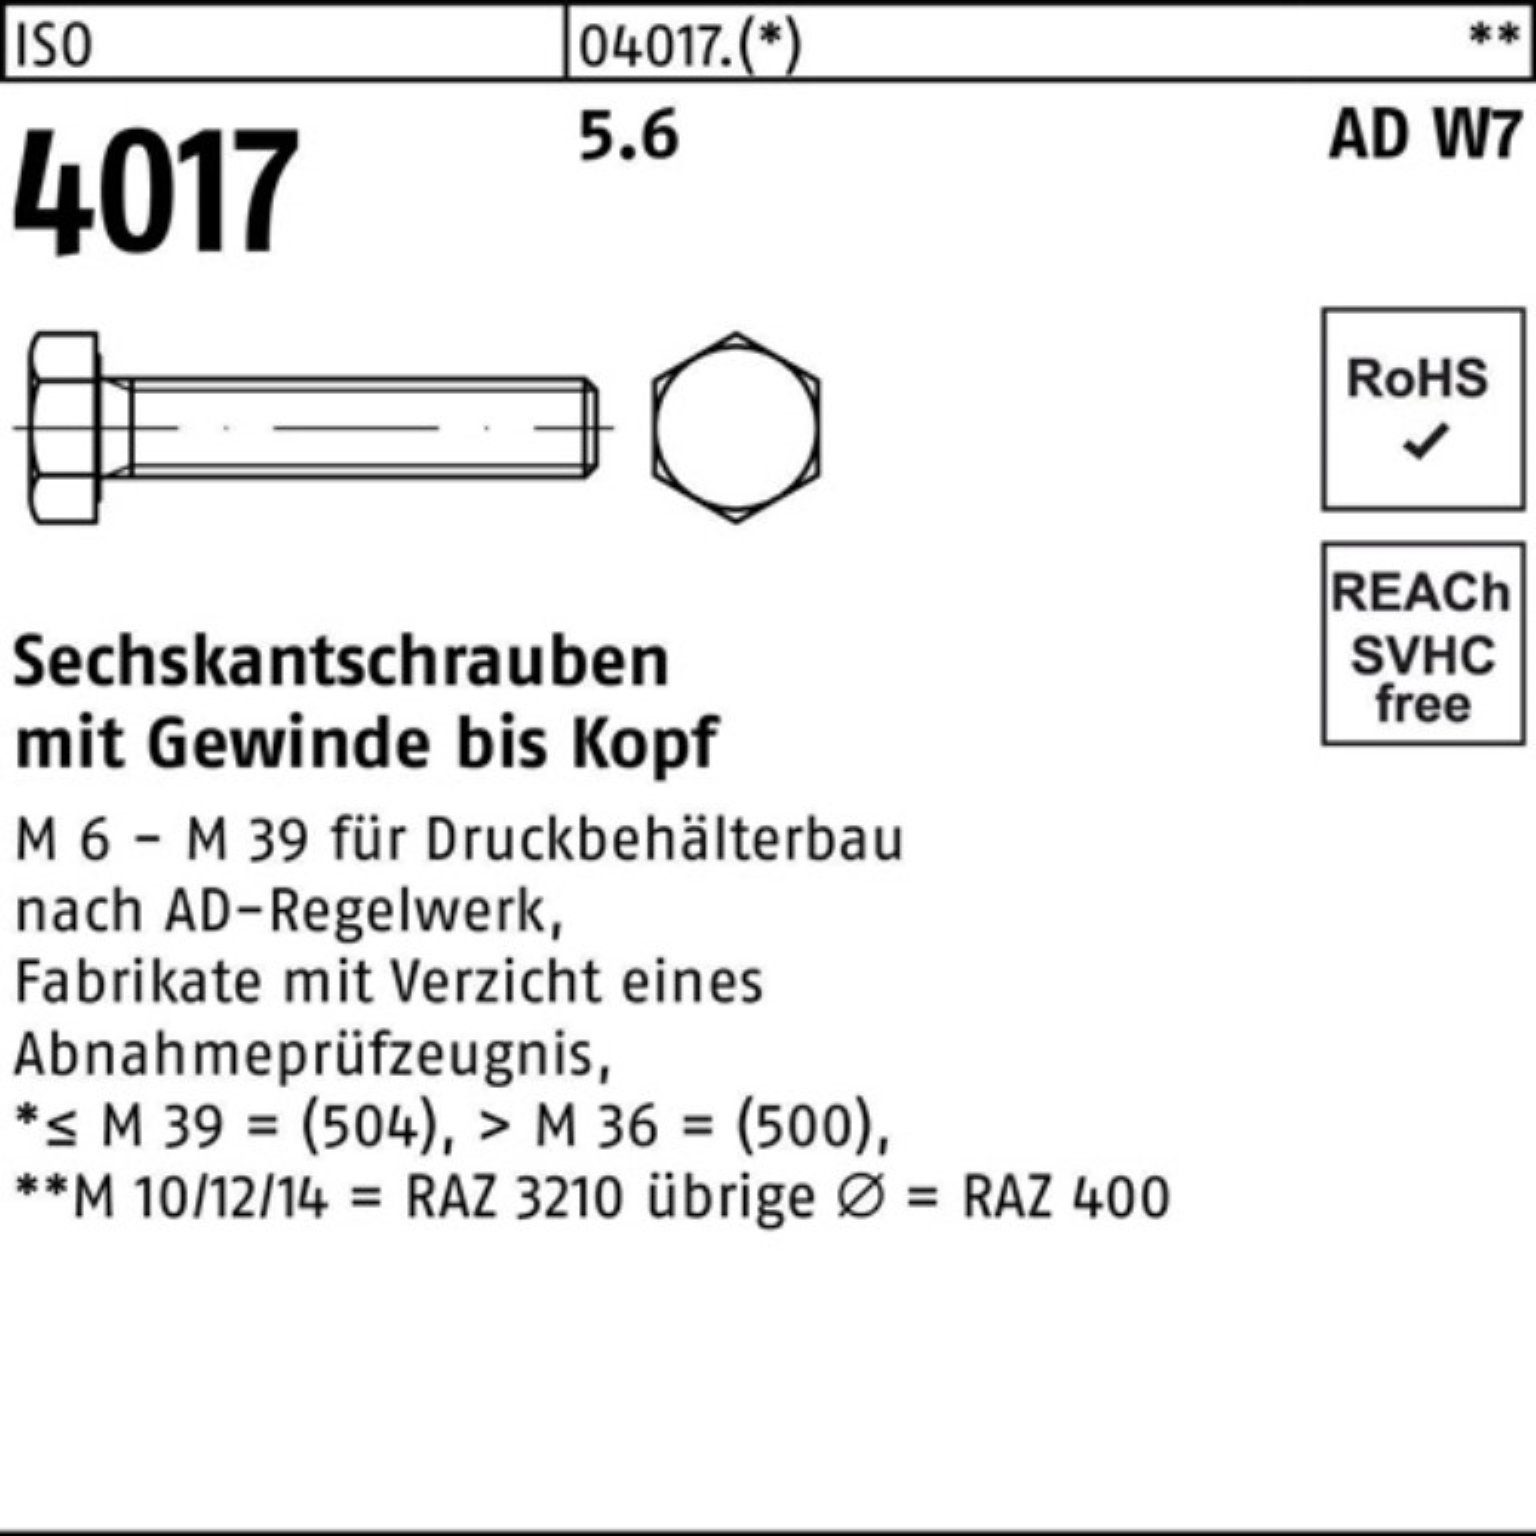 Bufab Sechskantschraube 100er Pack Sechskantschraube ISO 4017 VG M16x 110 5.6 AD W7 25 Stück